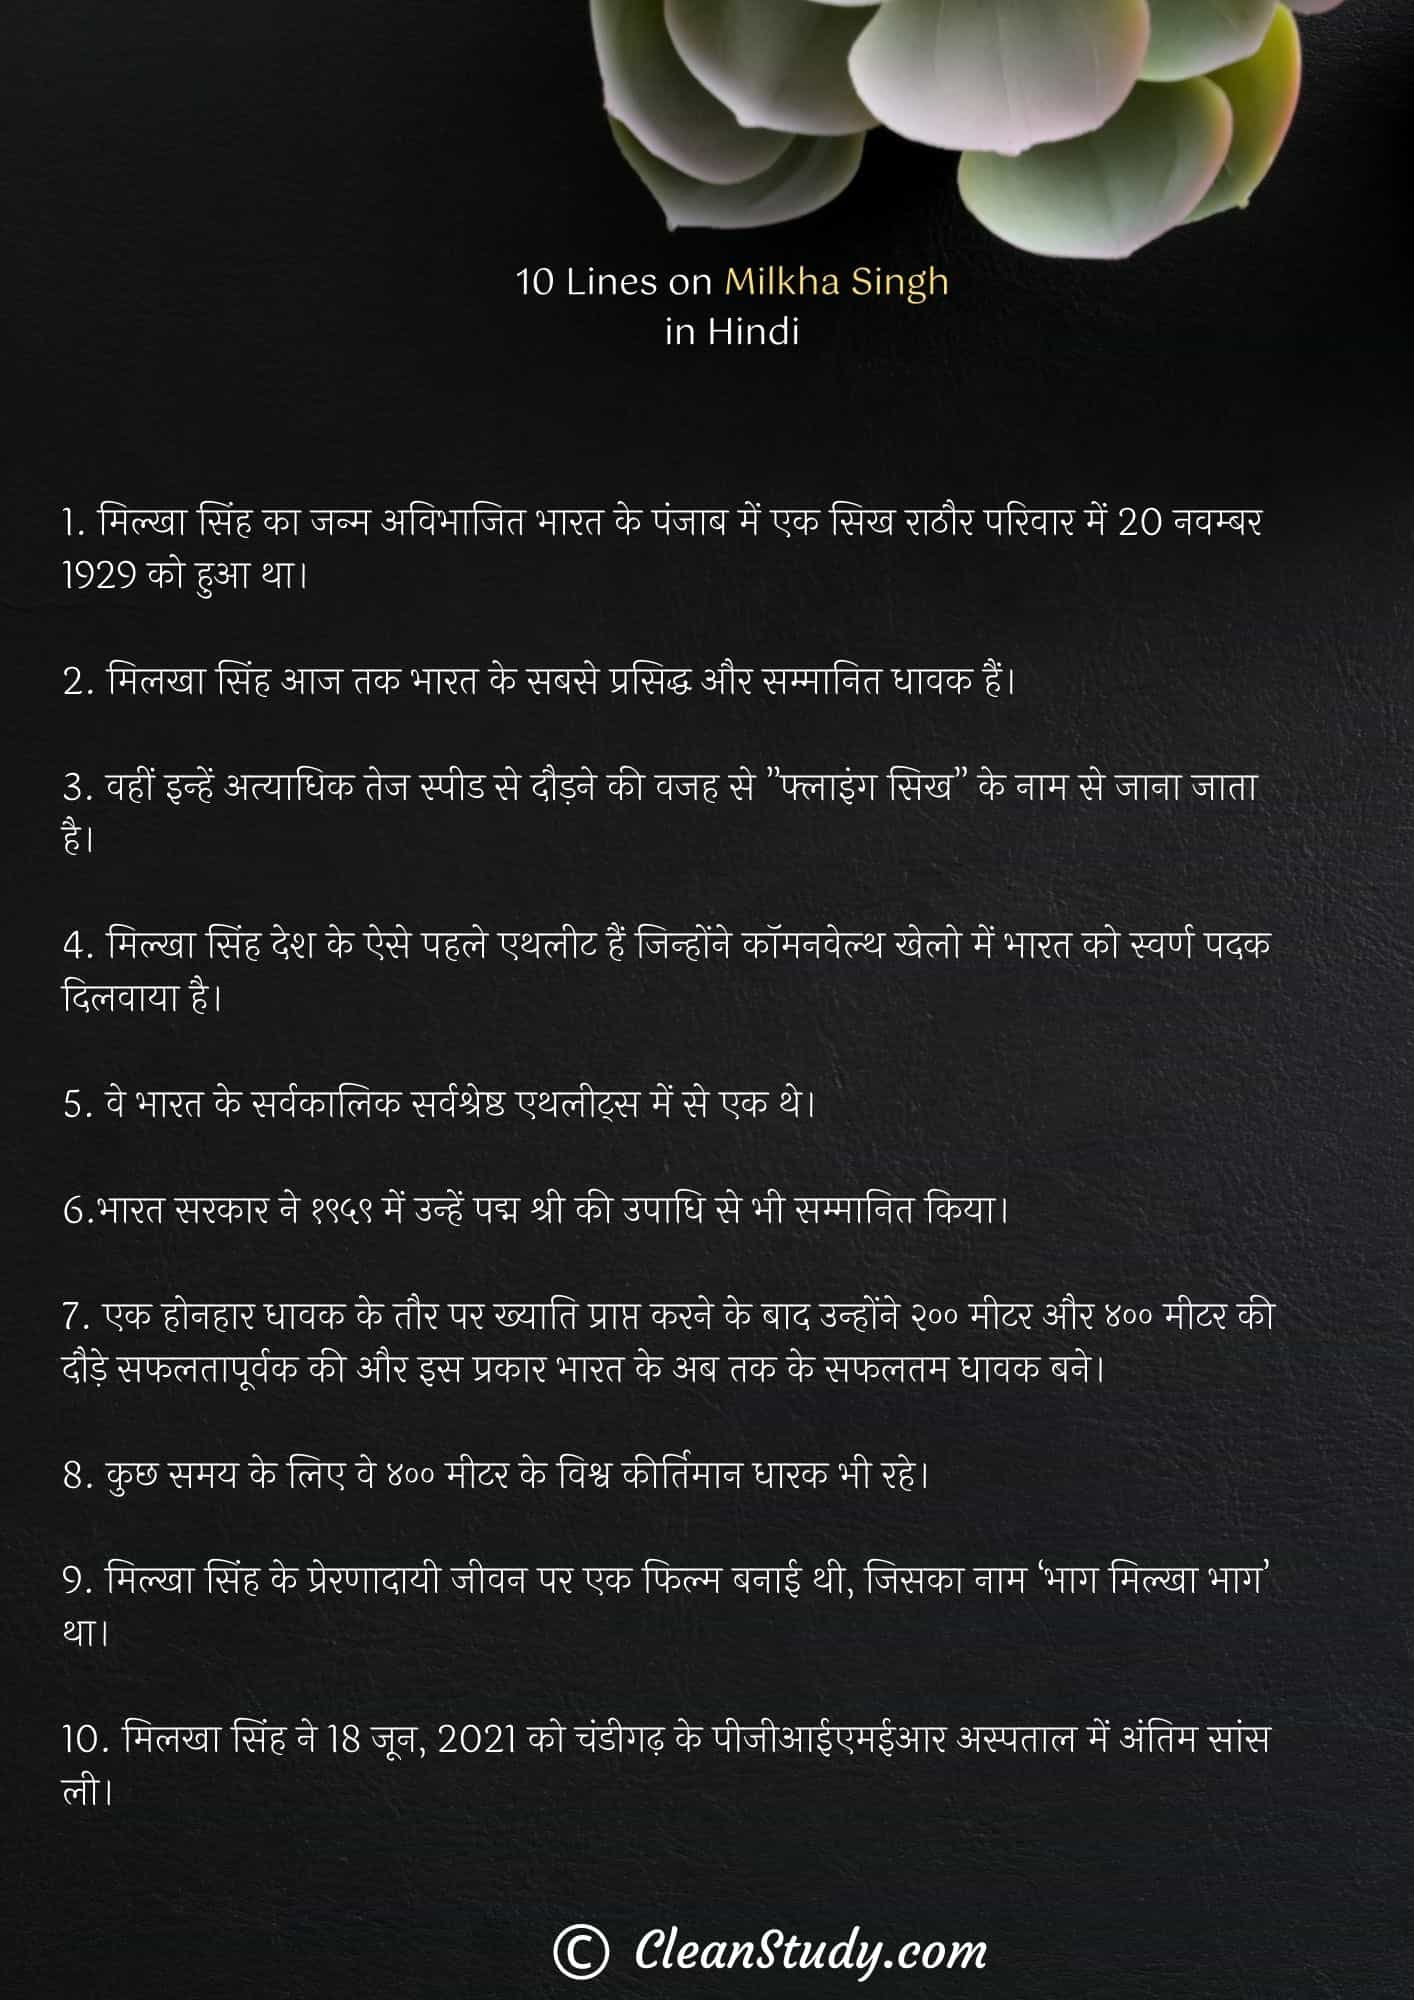 10 Lines on Milkha Singh in Hindi